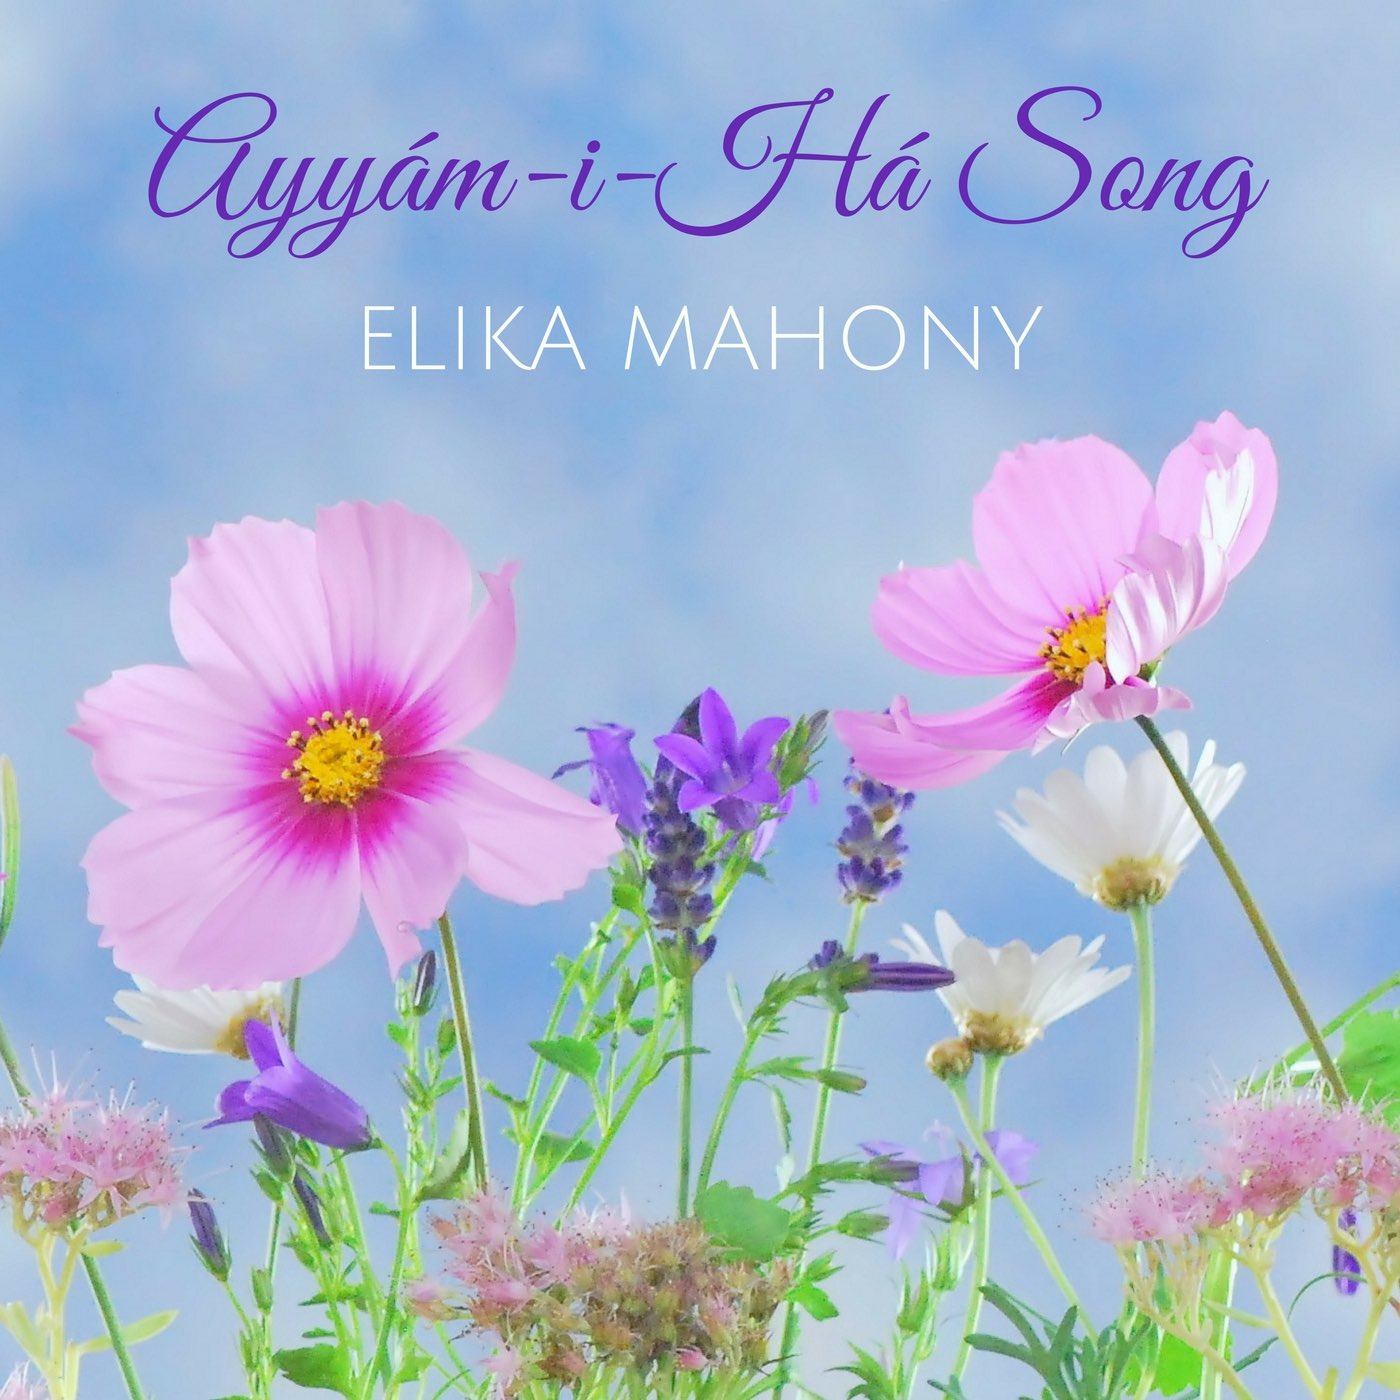 Ayyamiha-song-for-Etsy-cover-smaller